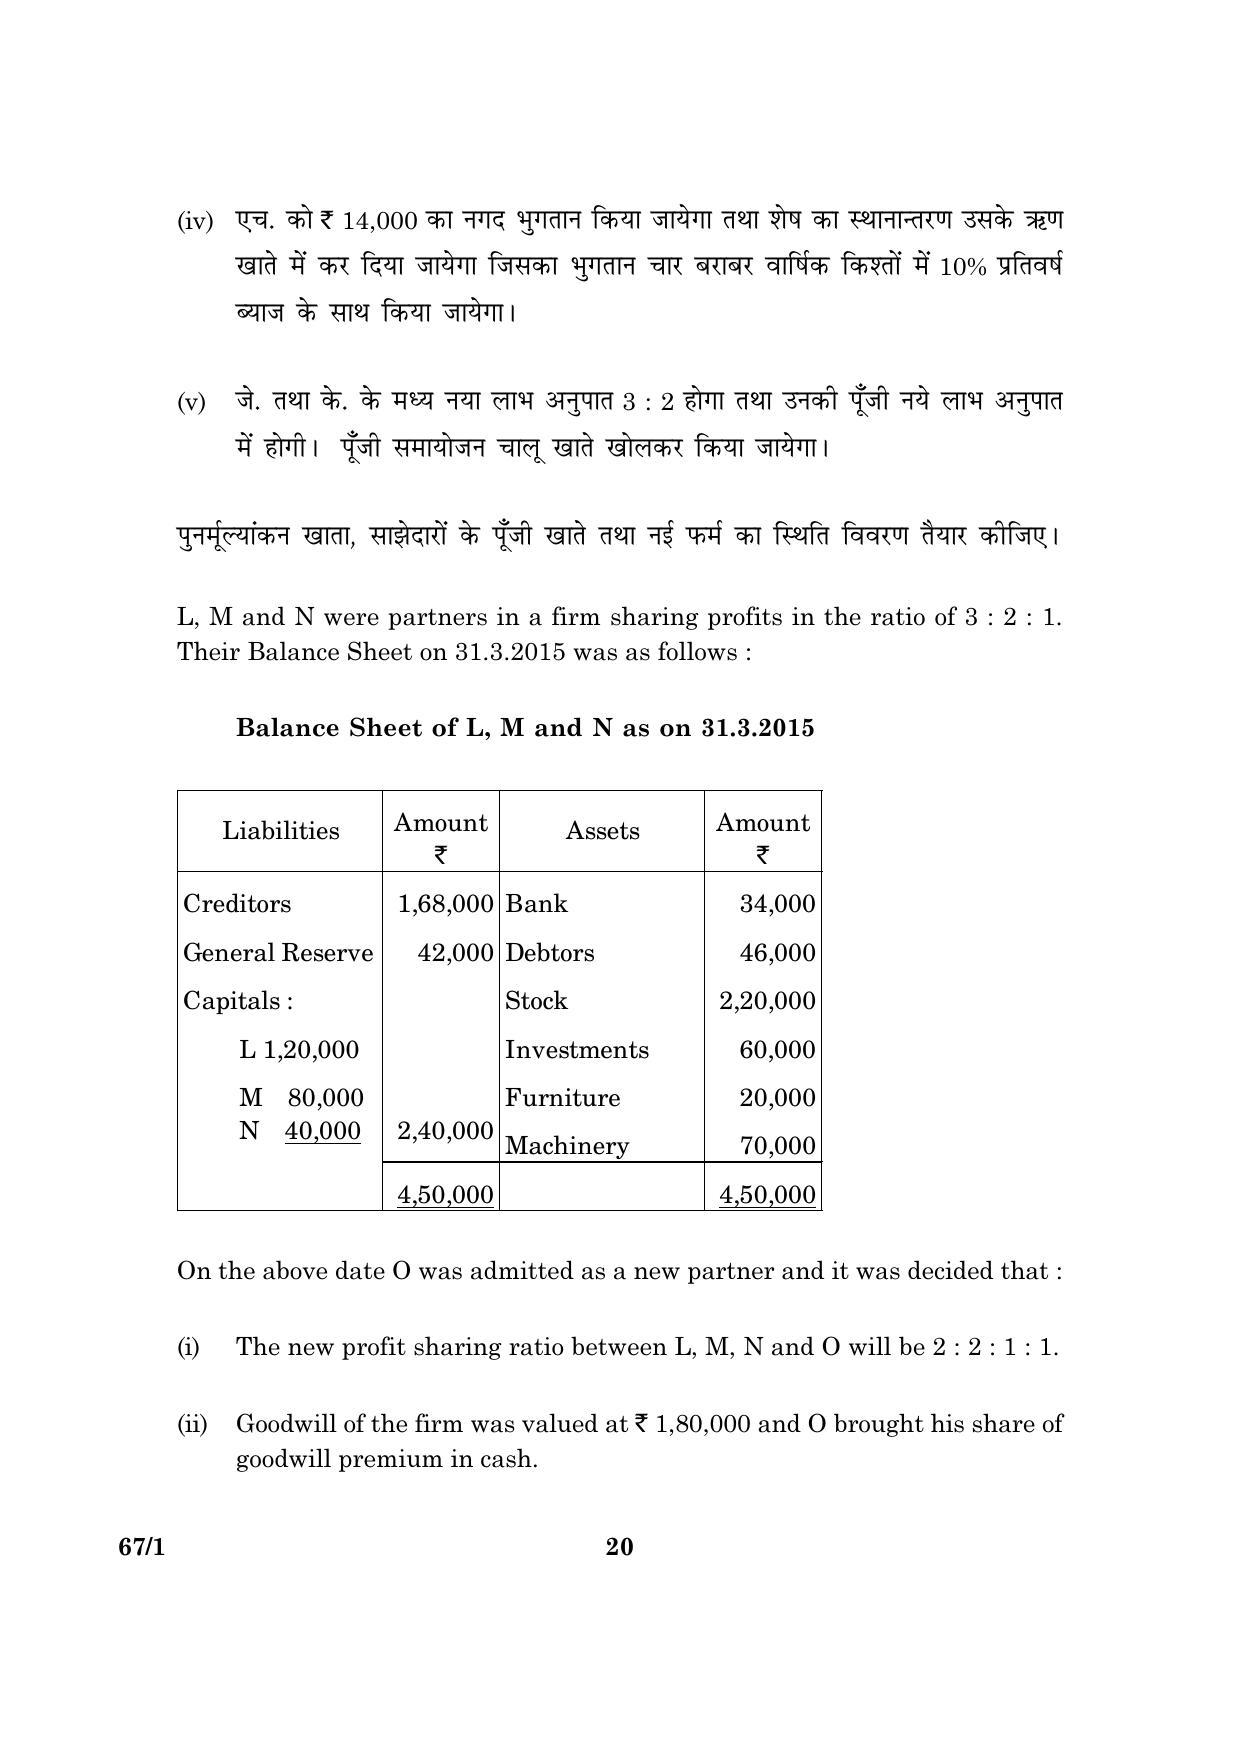 CBSE Class 12 067 Set 1 Accountancy 2016 Question Paper - Page 20